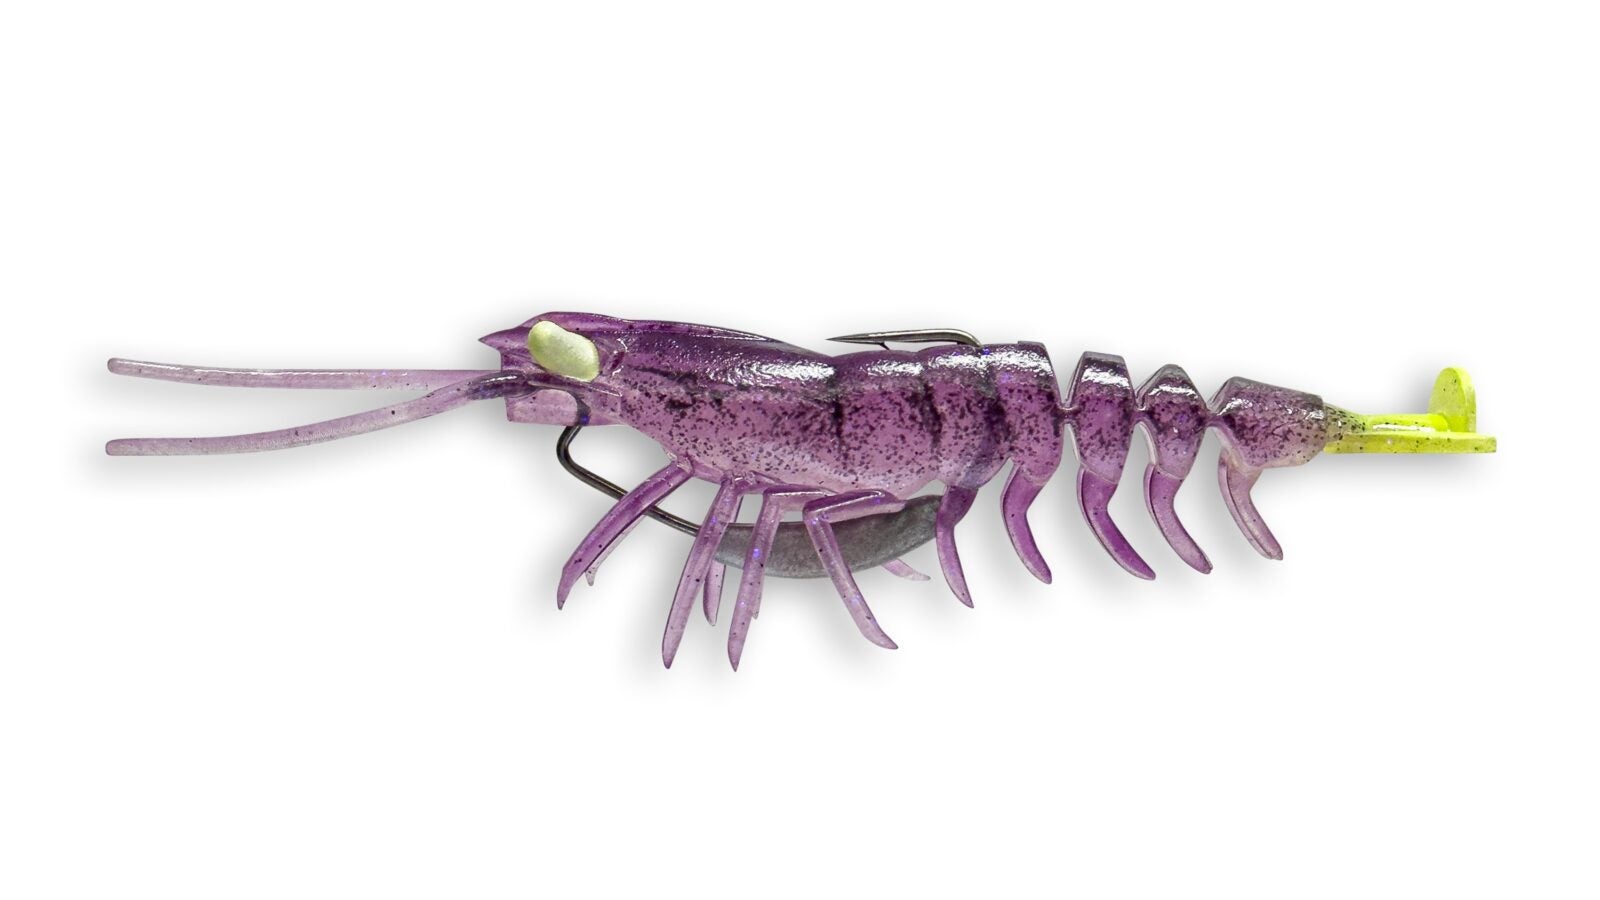 NEW Manic Shrimp V2 from Savage Gear - Ultra Realistic Plastic Shrimp